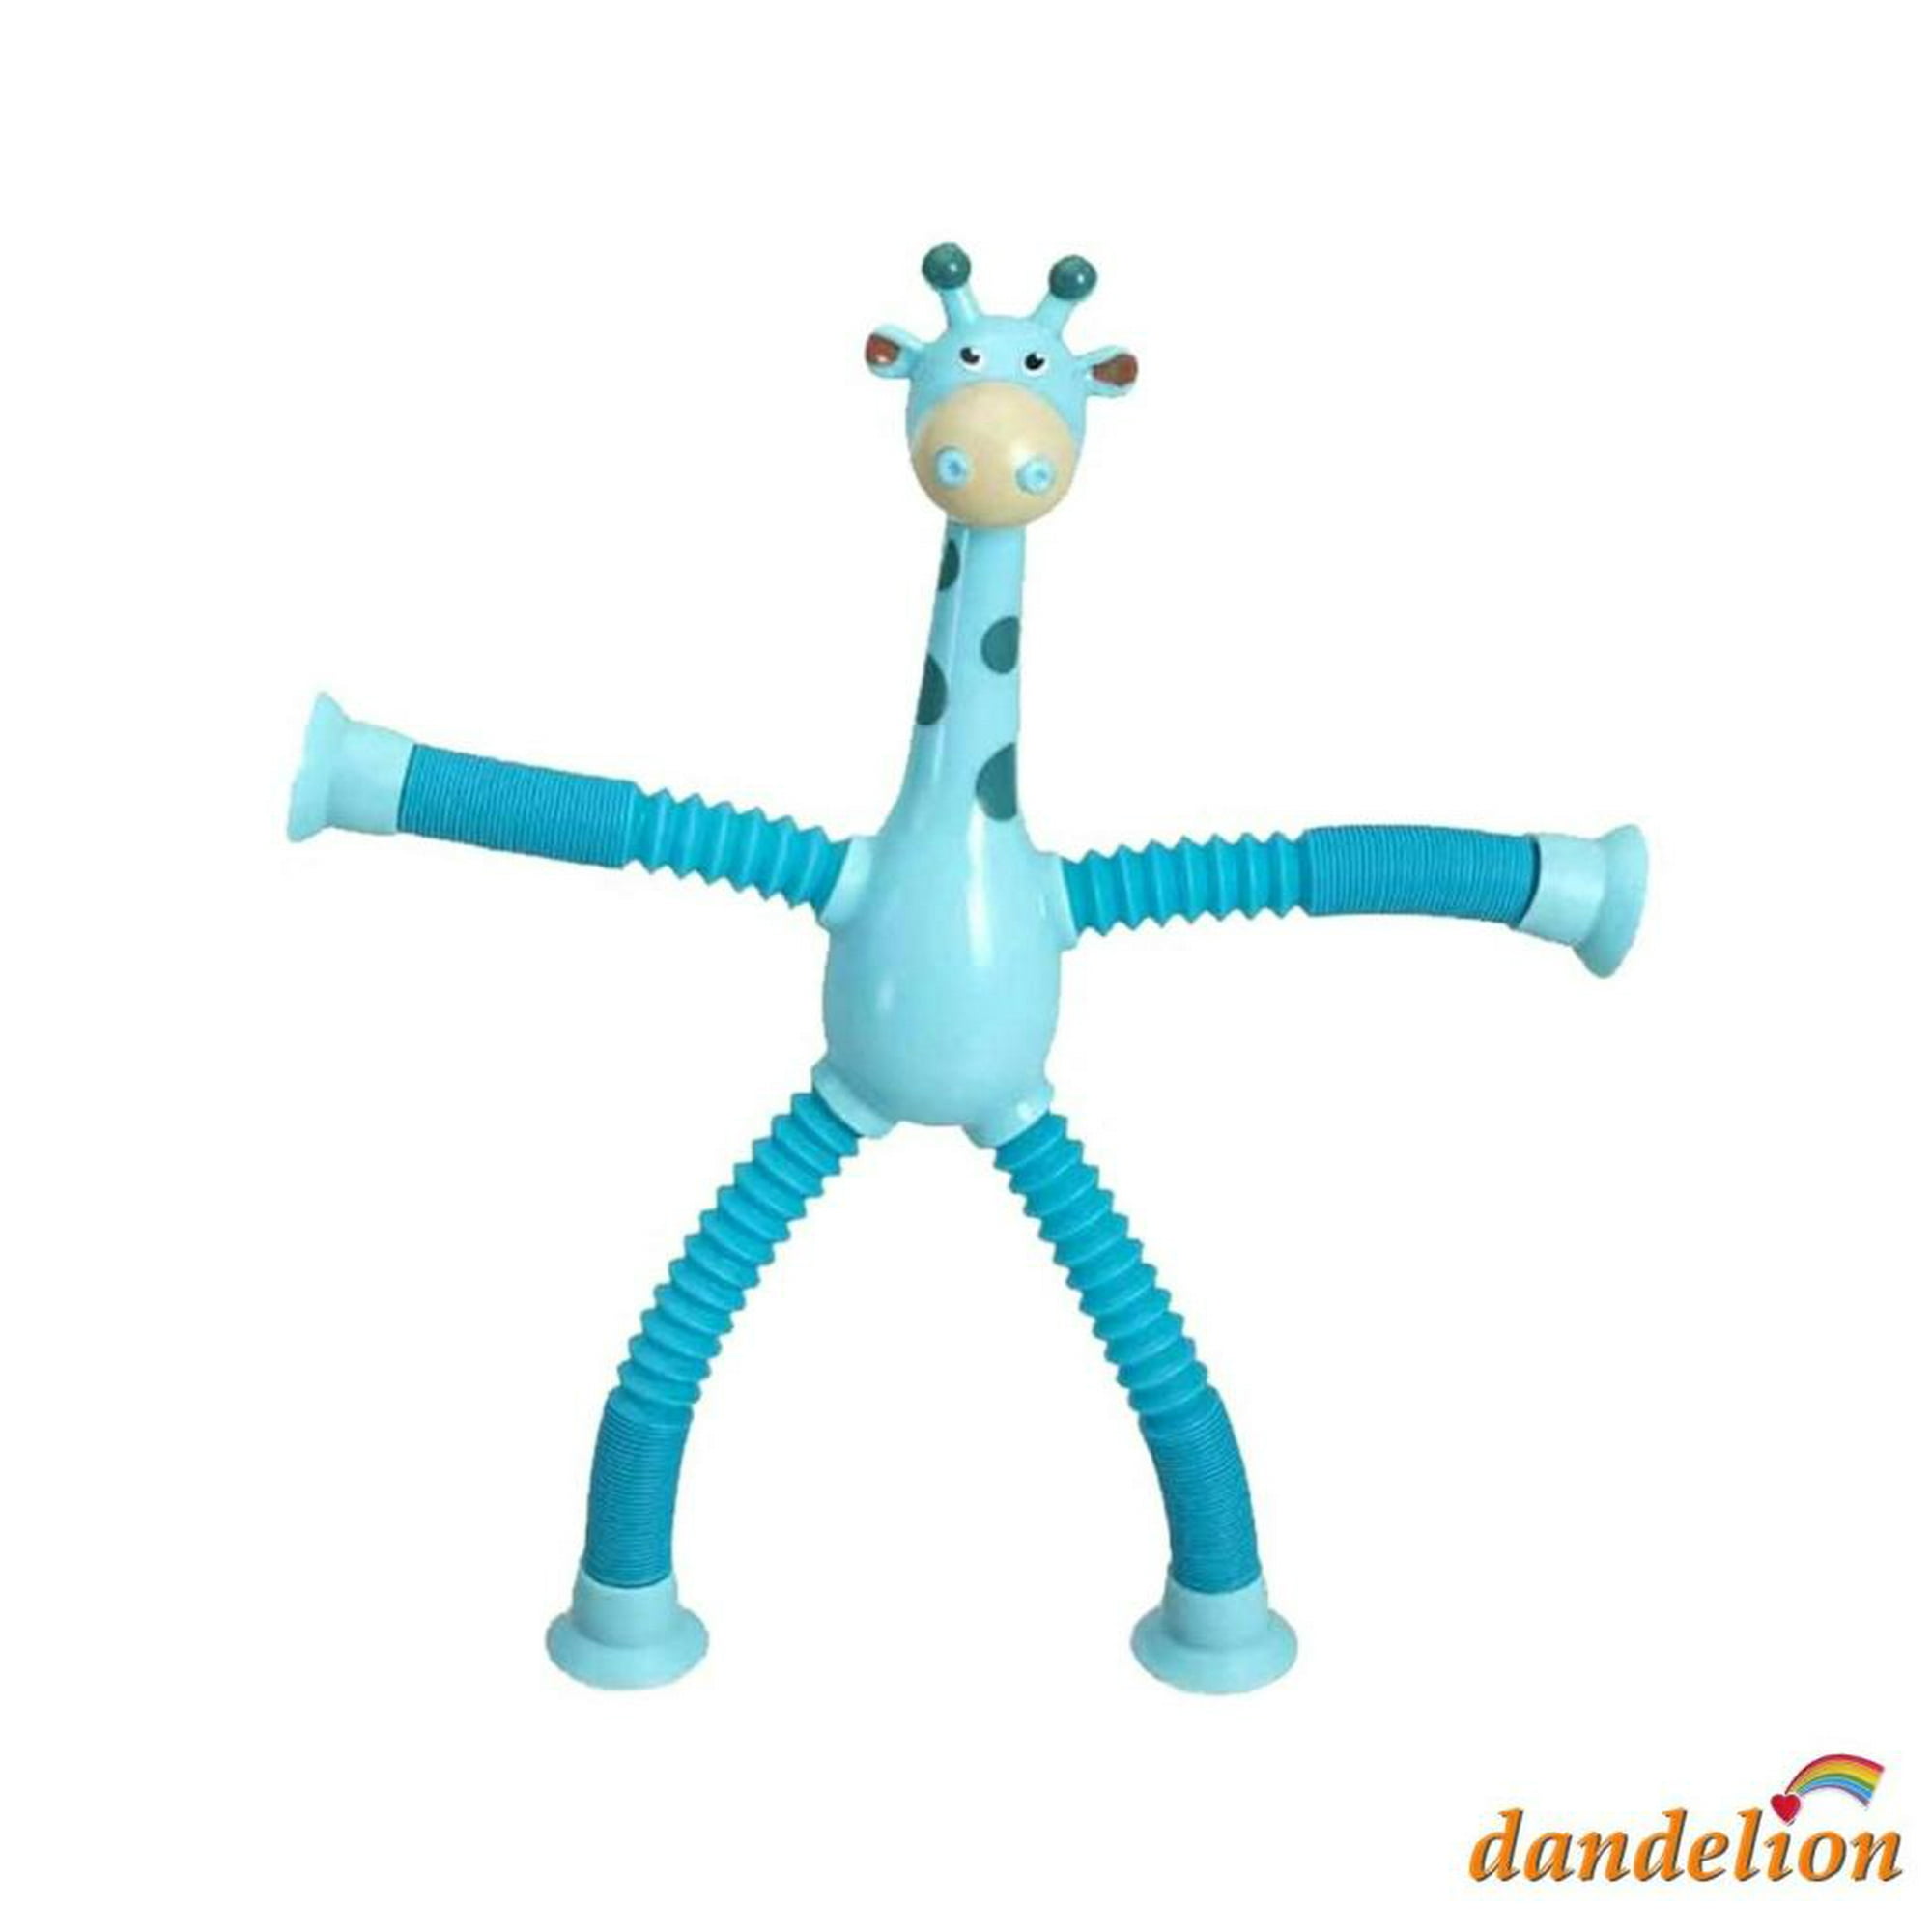 1 juguete telescópico de jirafa con ventosa, tubos sensoriales